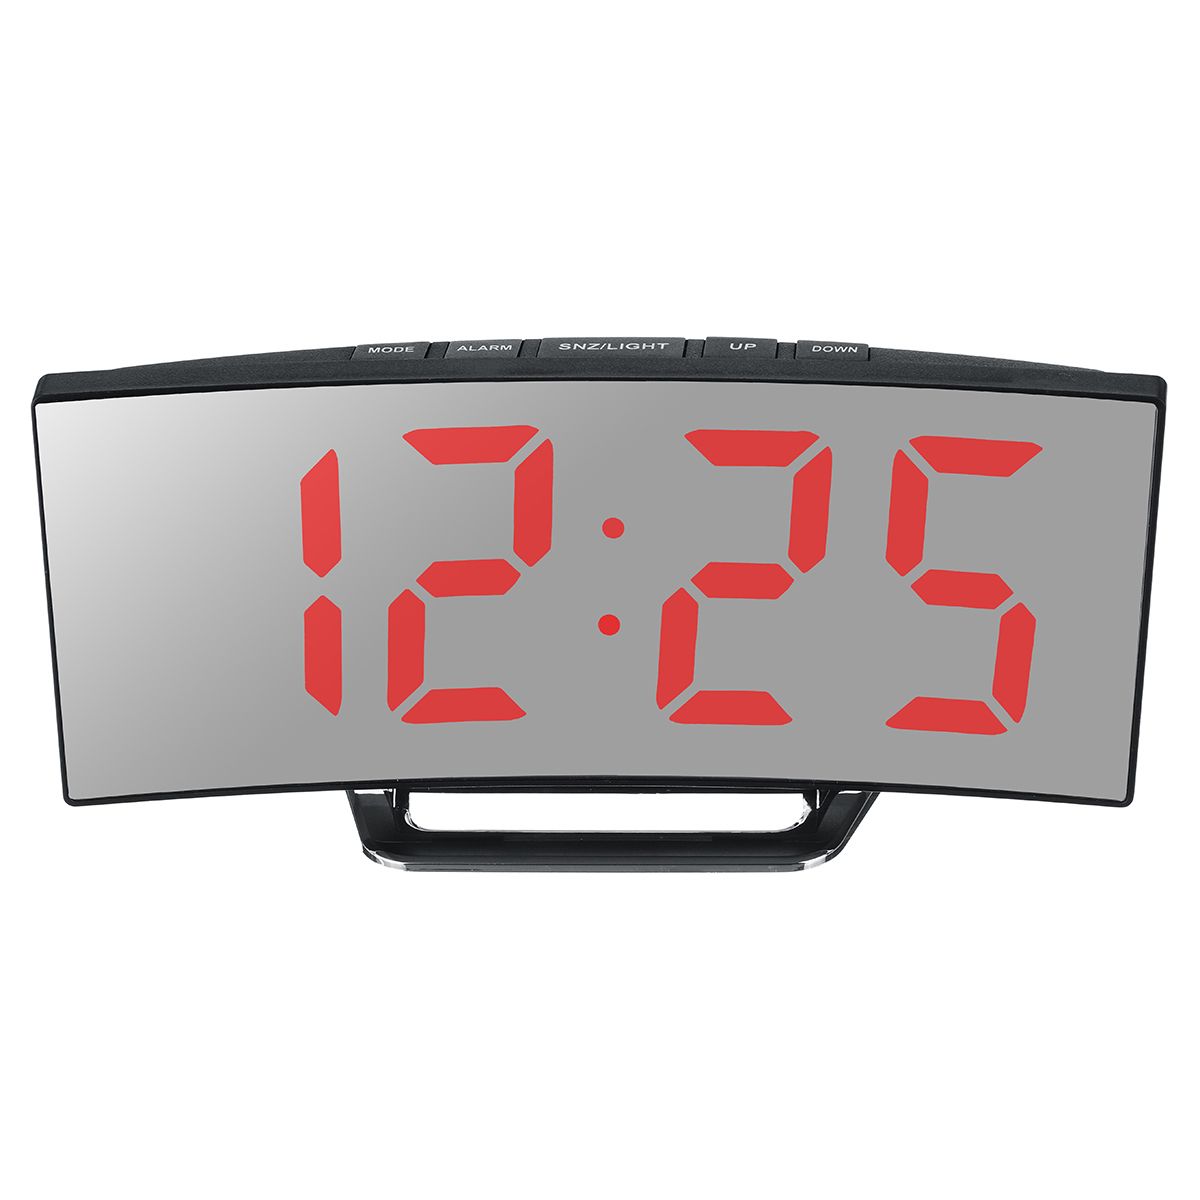 Curved-LED-Digital-Alarm-Clock-Mirror-Table-Display-Temperature-Snooze-USB-Room-1639017